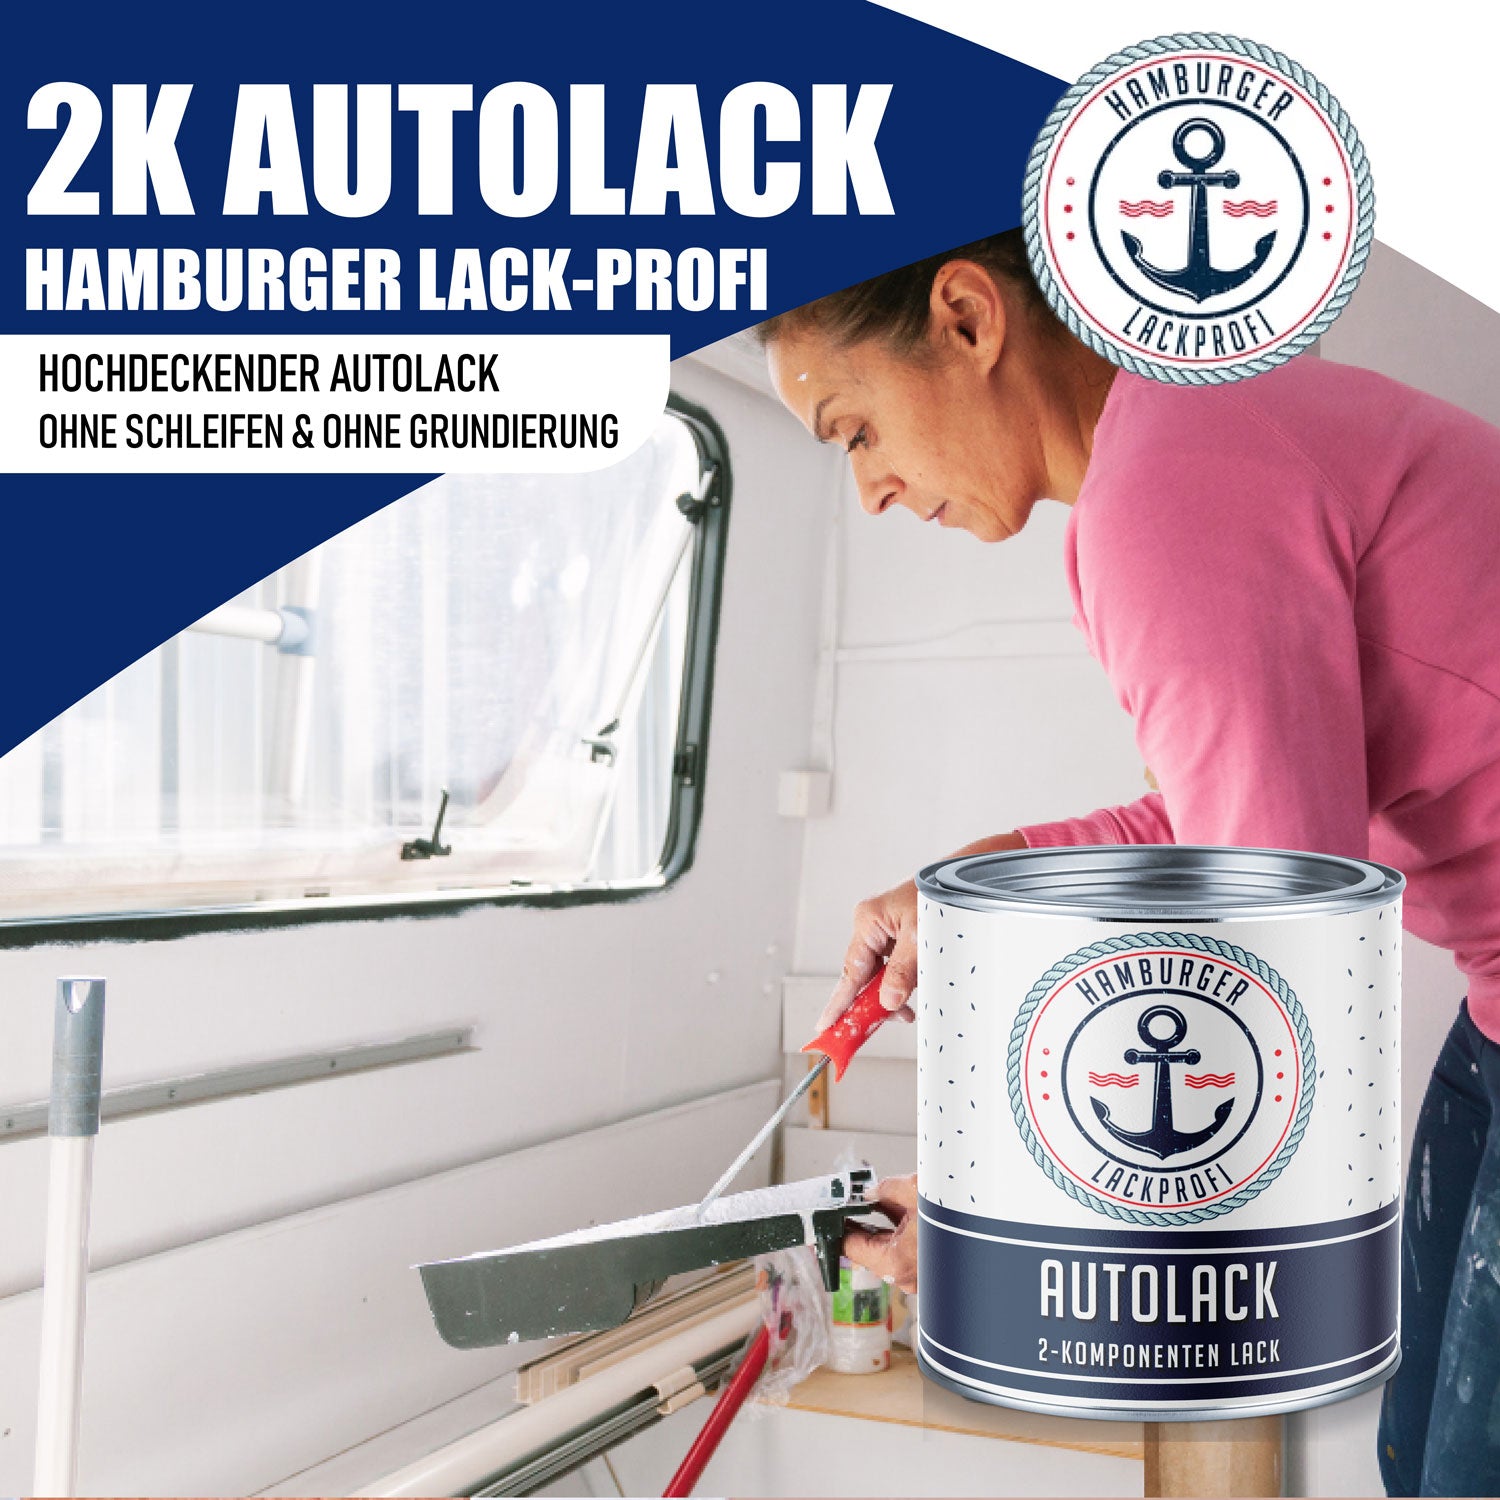 Hamburger Lack-Profi 2K Autolack in Grasgrün RAL 6010 mit Lackierset (X300) & Verdünnung (1 L) - 30% Sparangebot